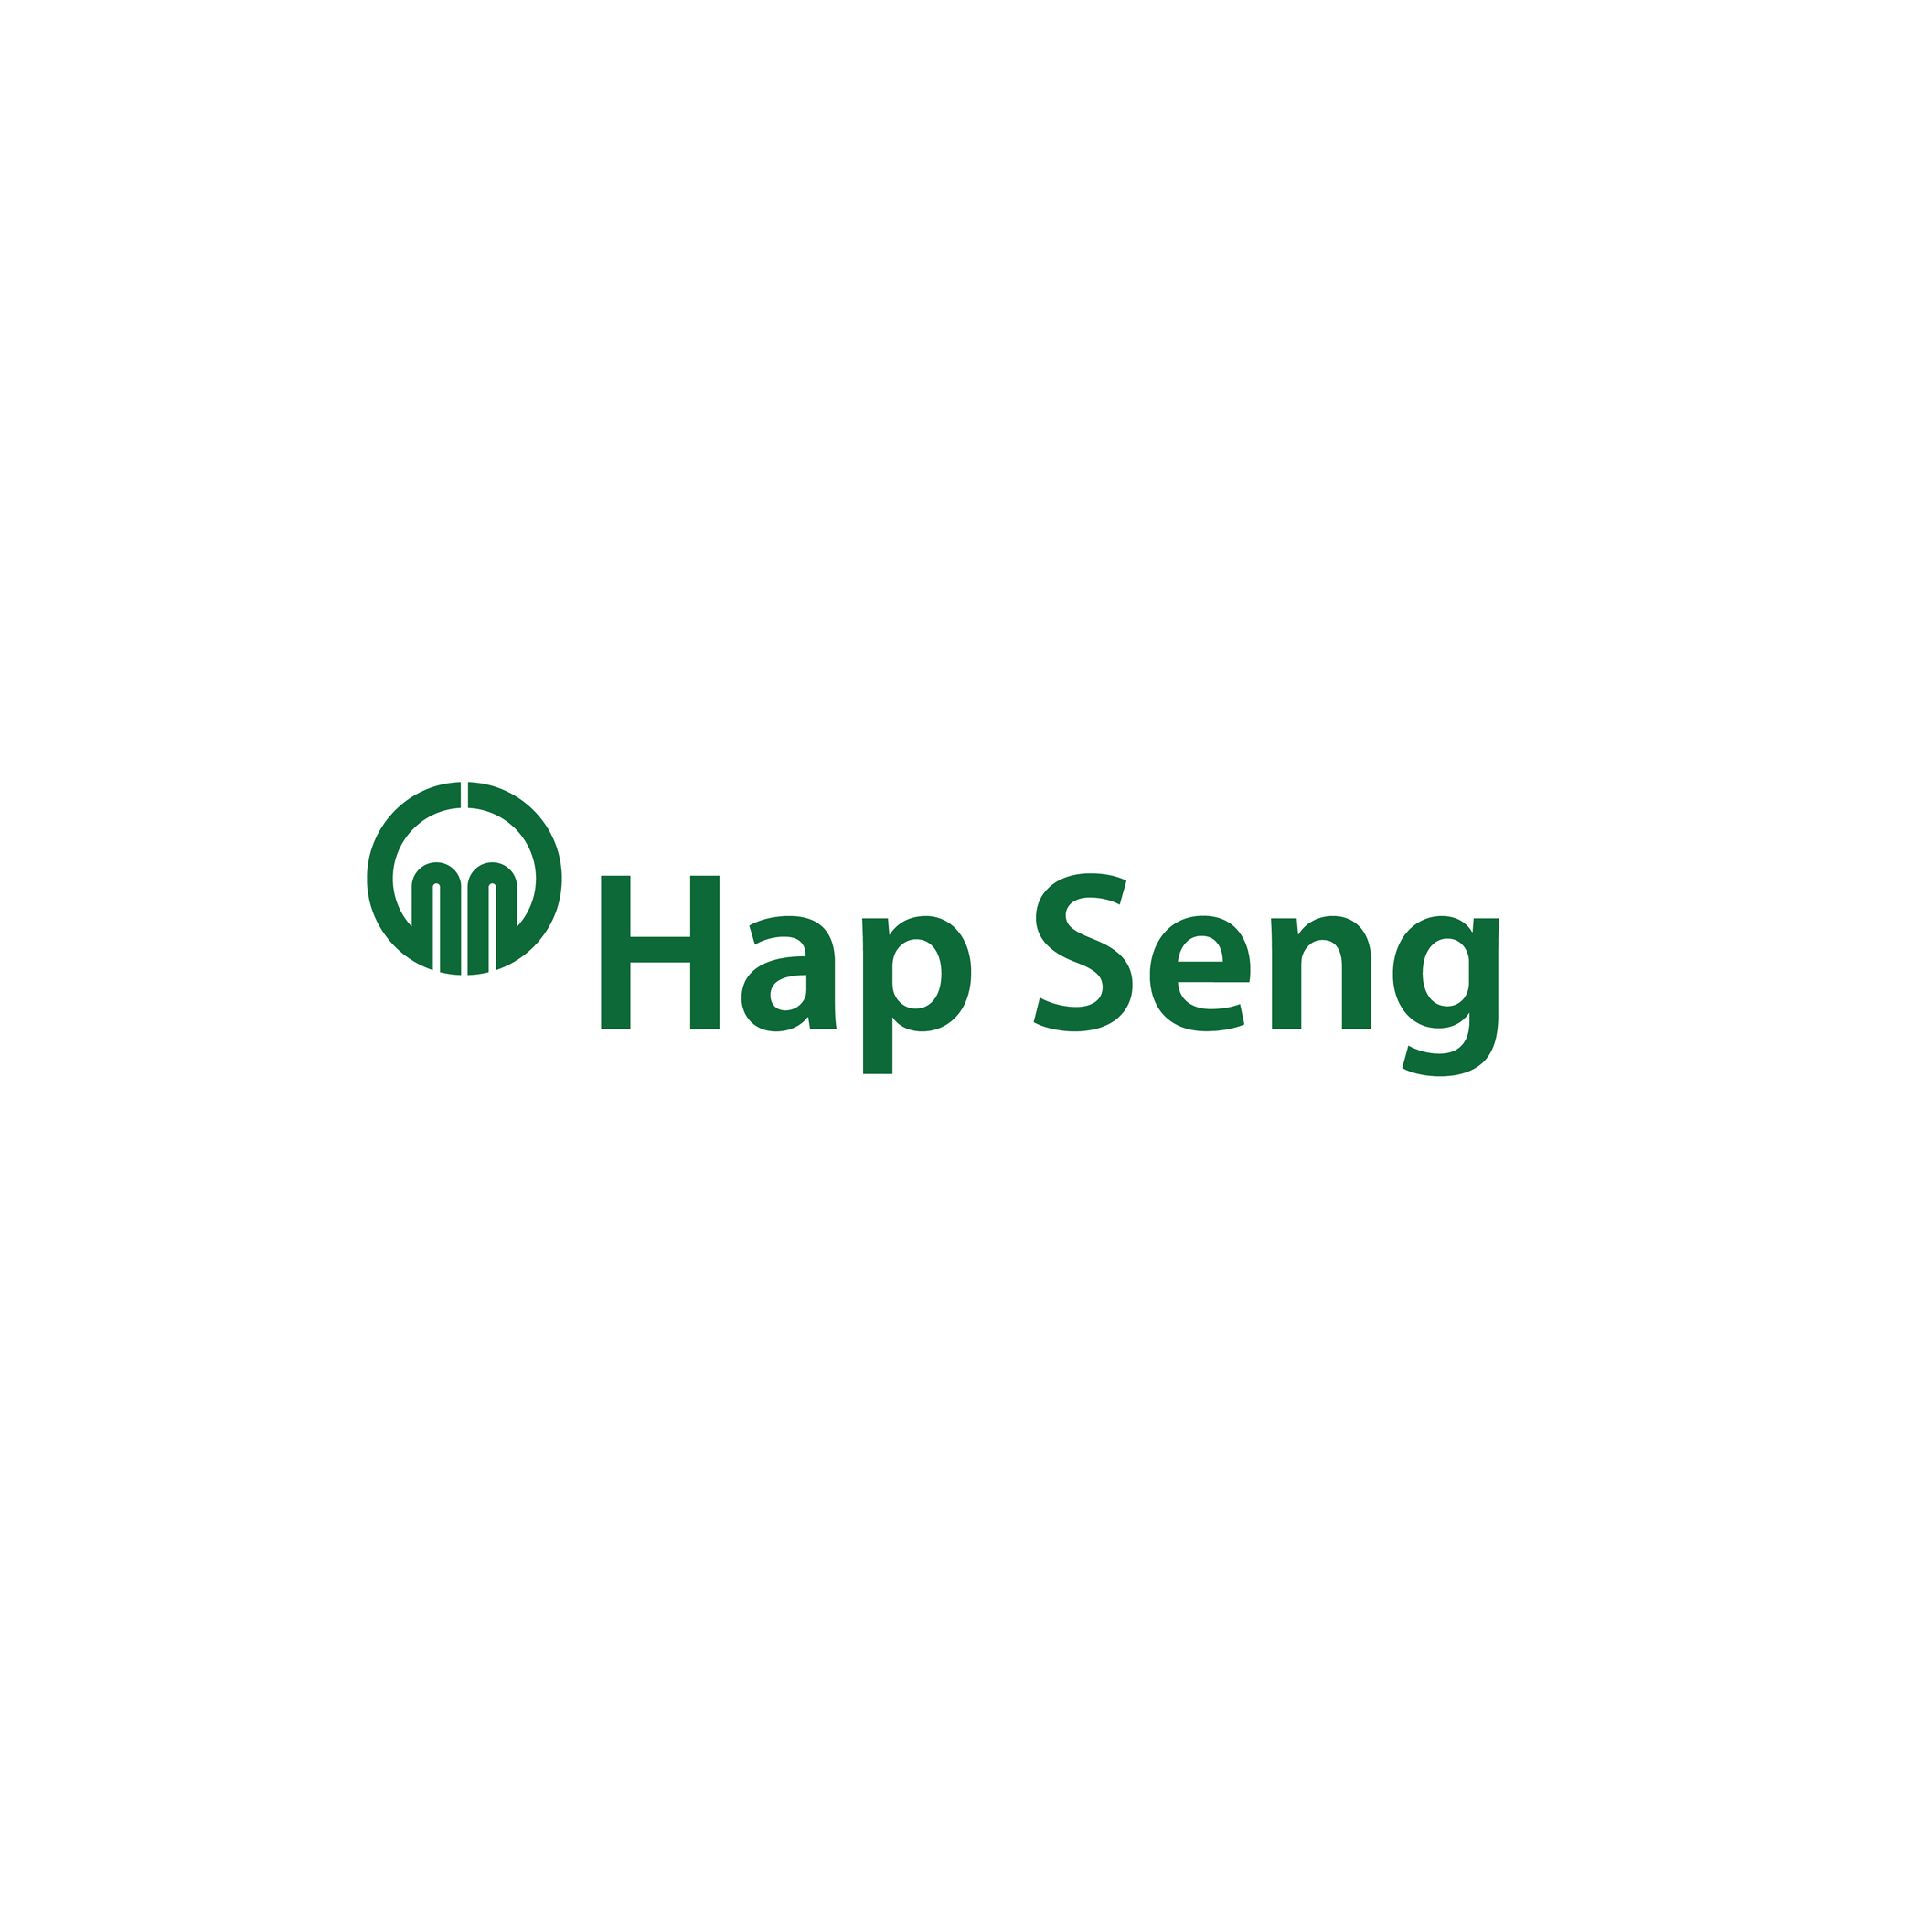 Product Brand: Hup Seng